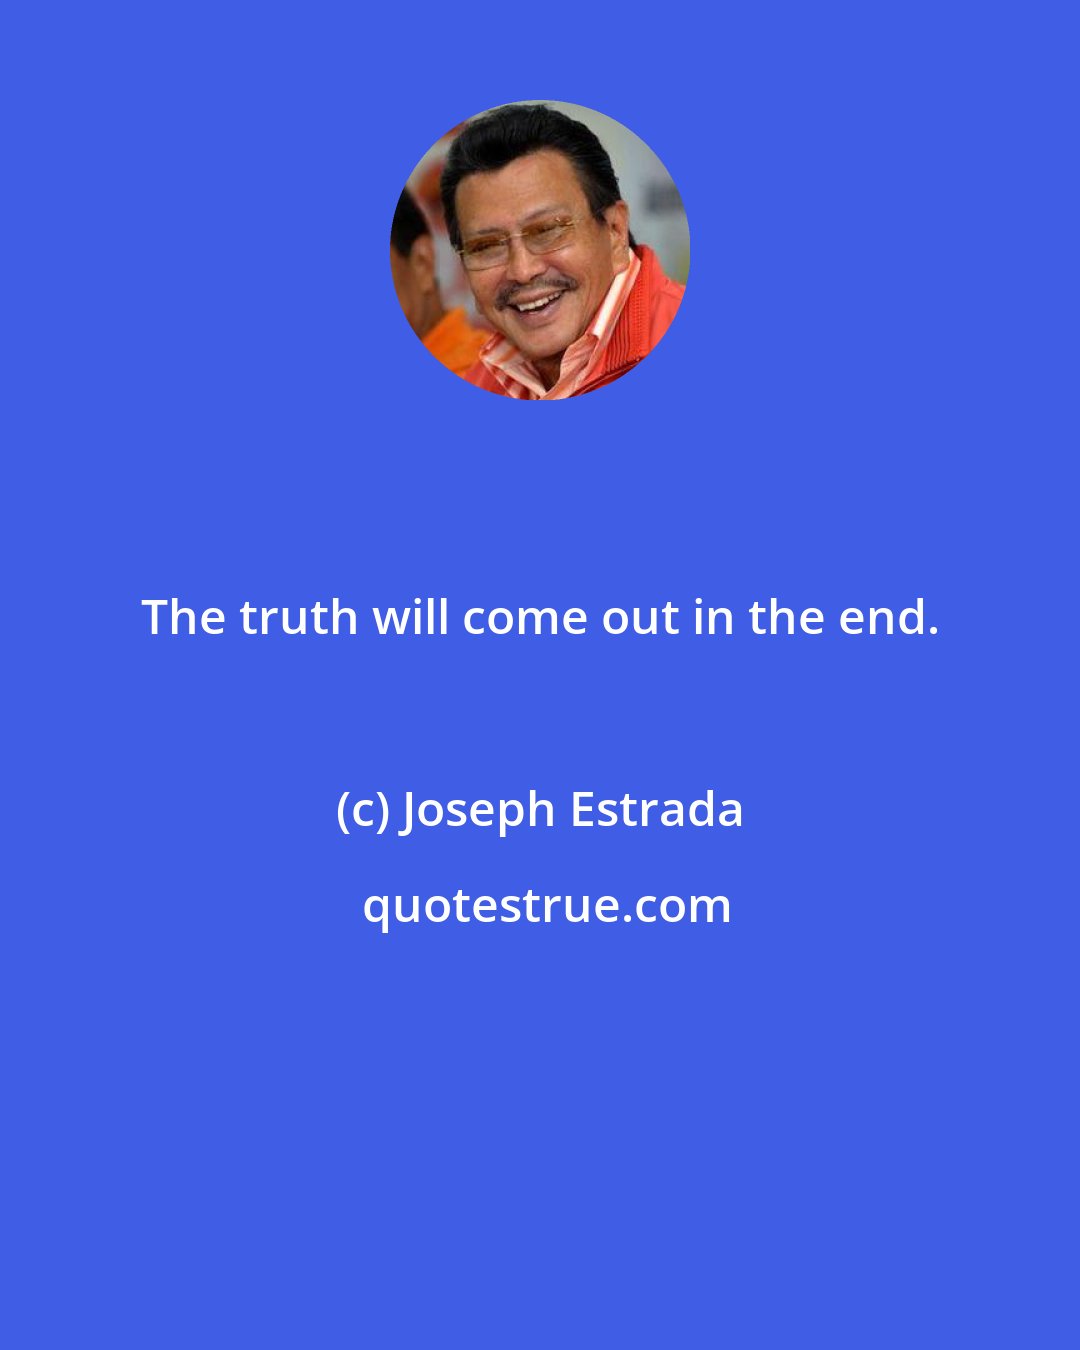 Joseph Estrada: The truth will come out in the end.